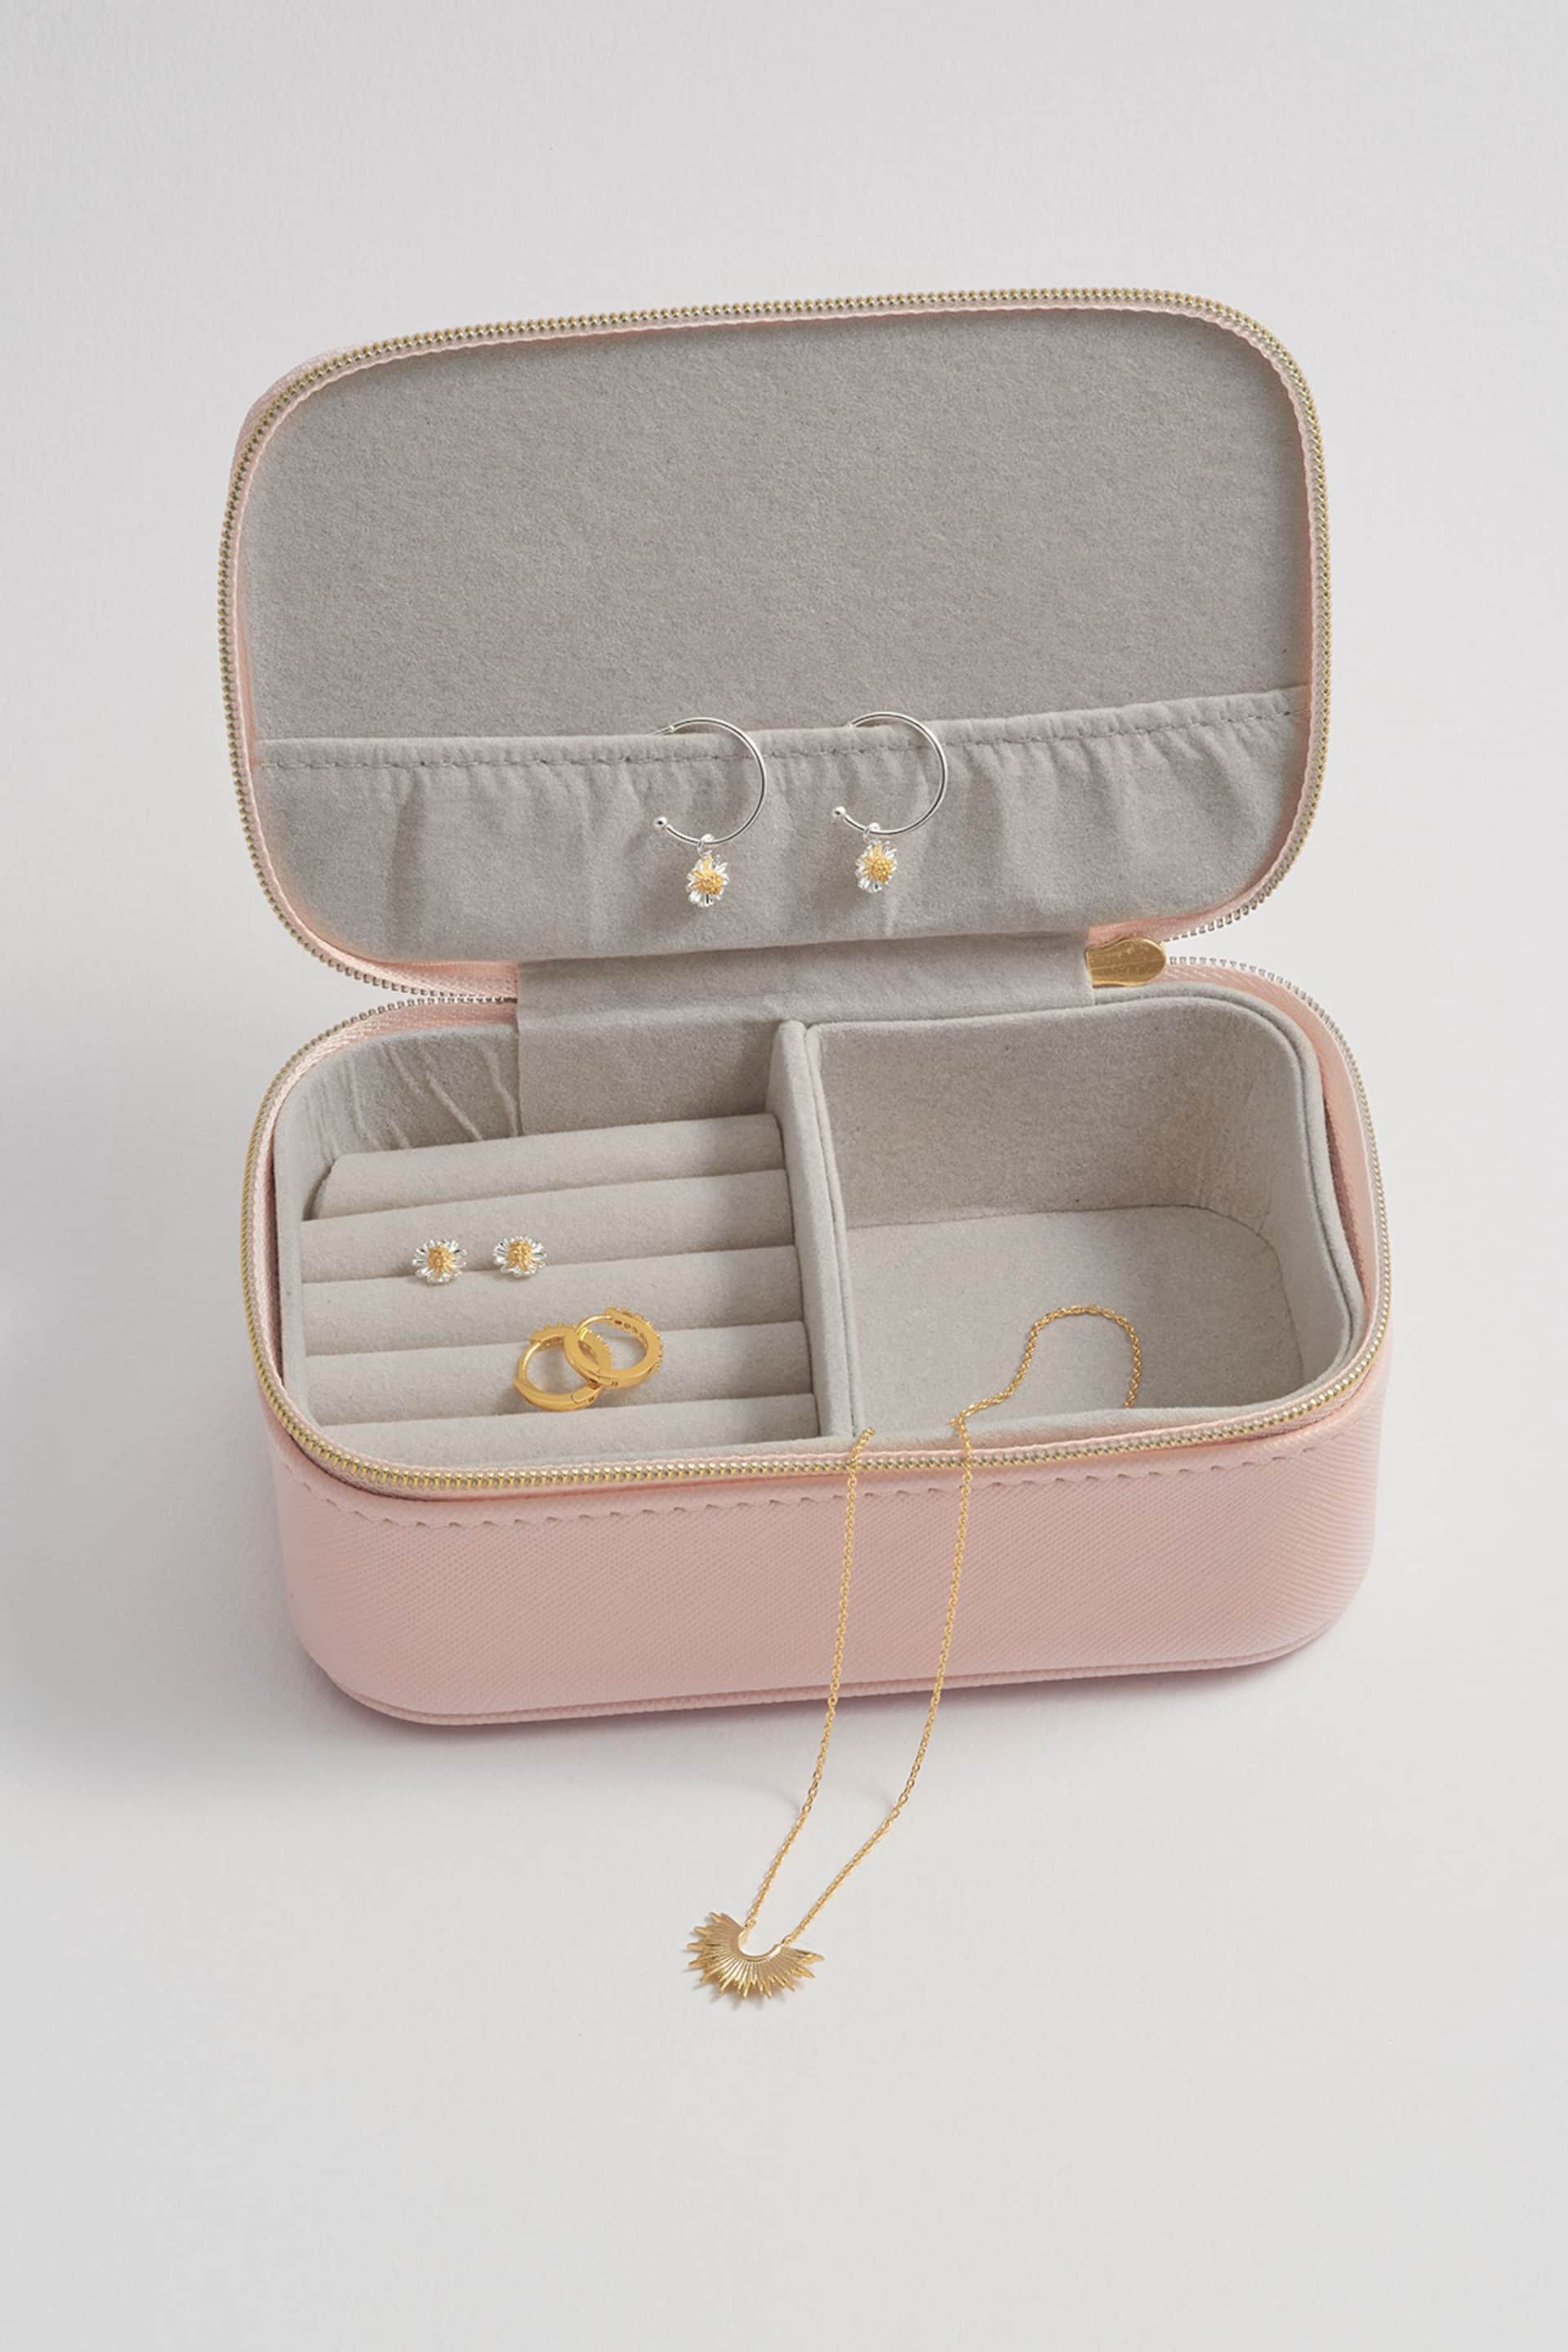 Estella Bartlett Blush Mini Jewellery Box - Image 4 of 4